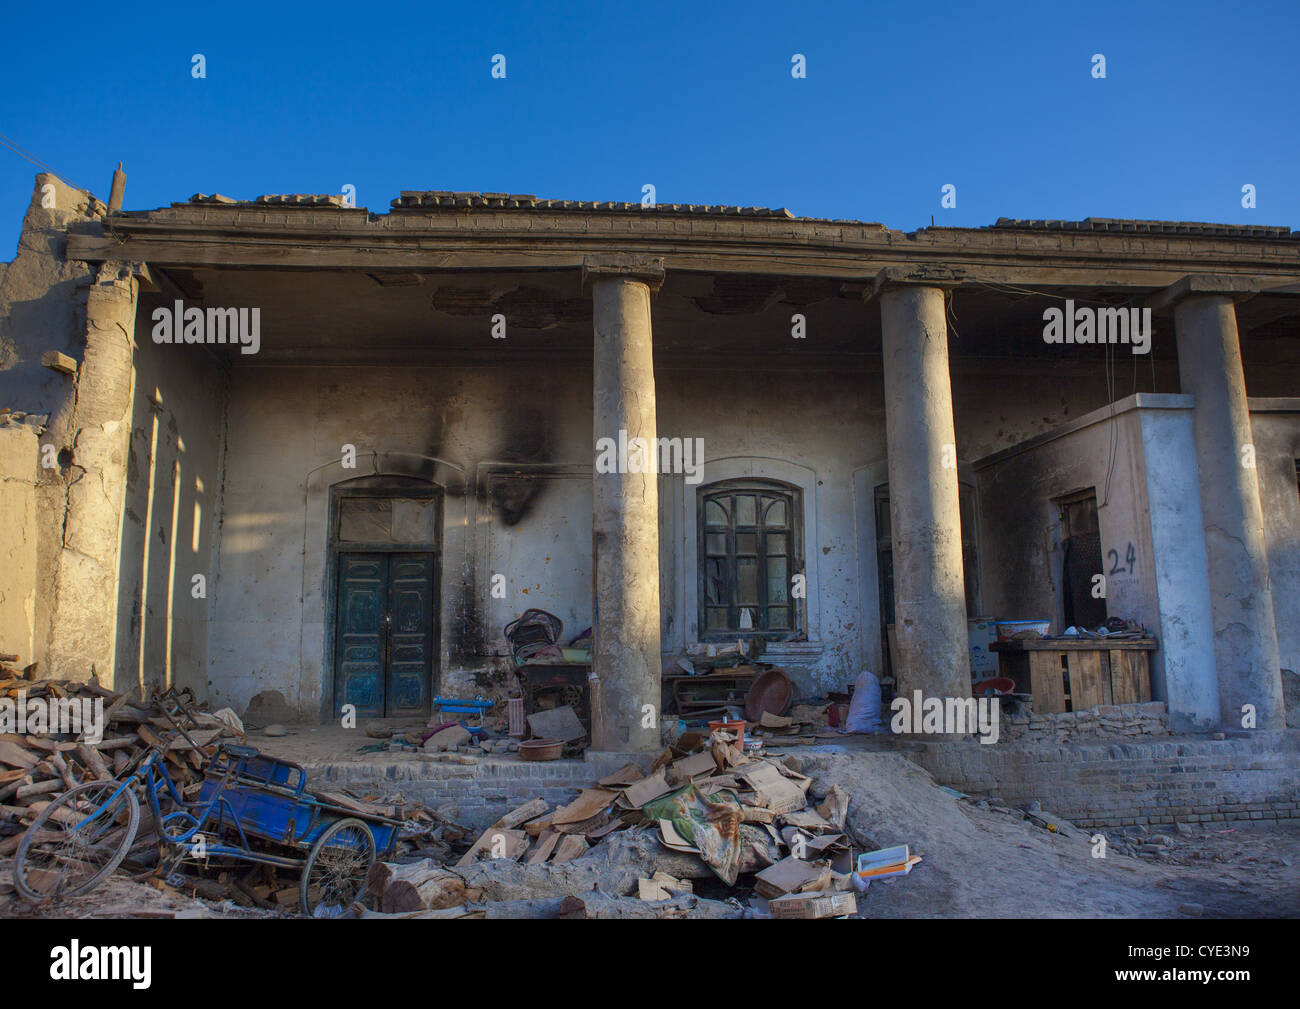 Ruins of an Old Uyghur House, Yarkand, Xinjiang Uyghur Autonomous Region, China Stock Photo